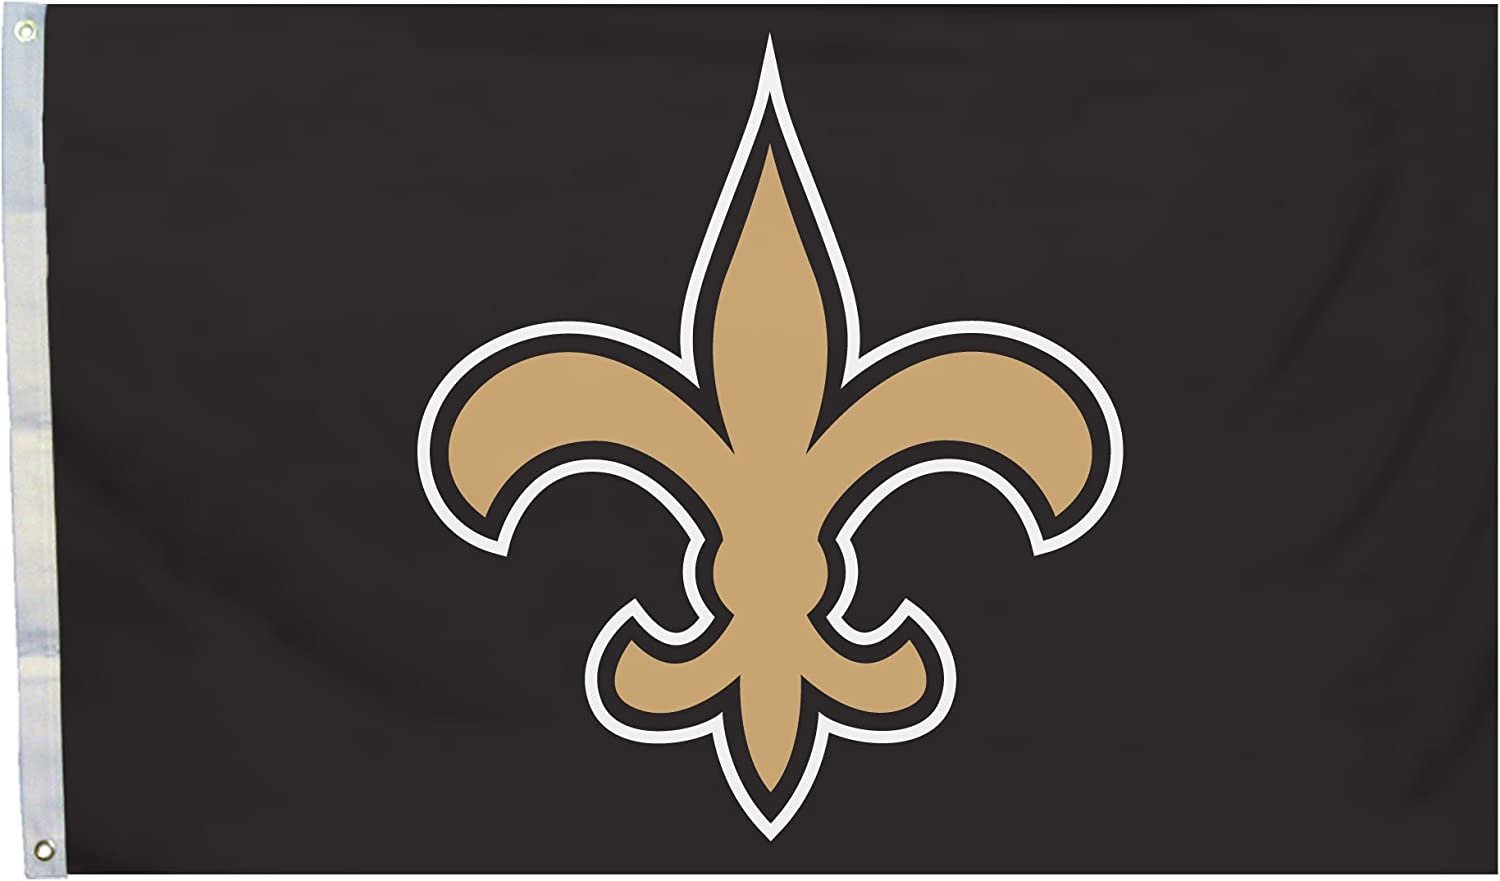 New Orleans Saints Flag Banner 3x5 Feet Metal Grommets Logo Design